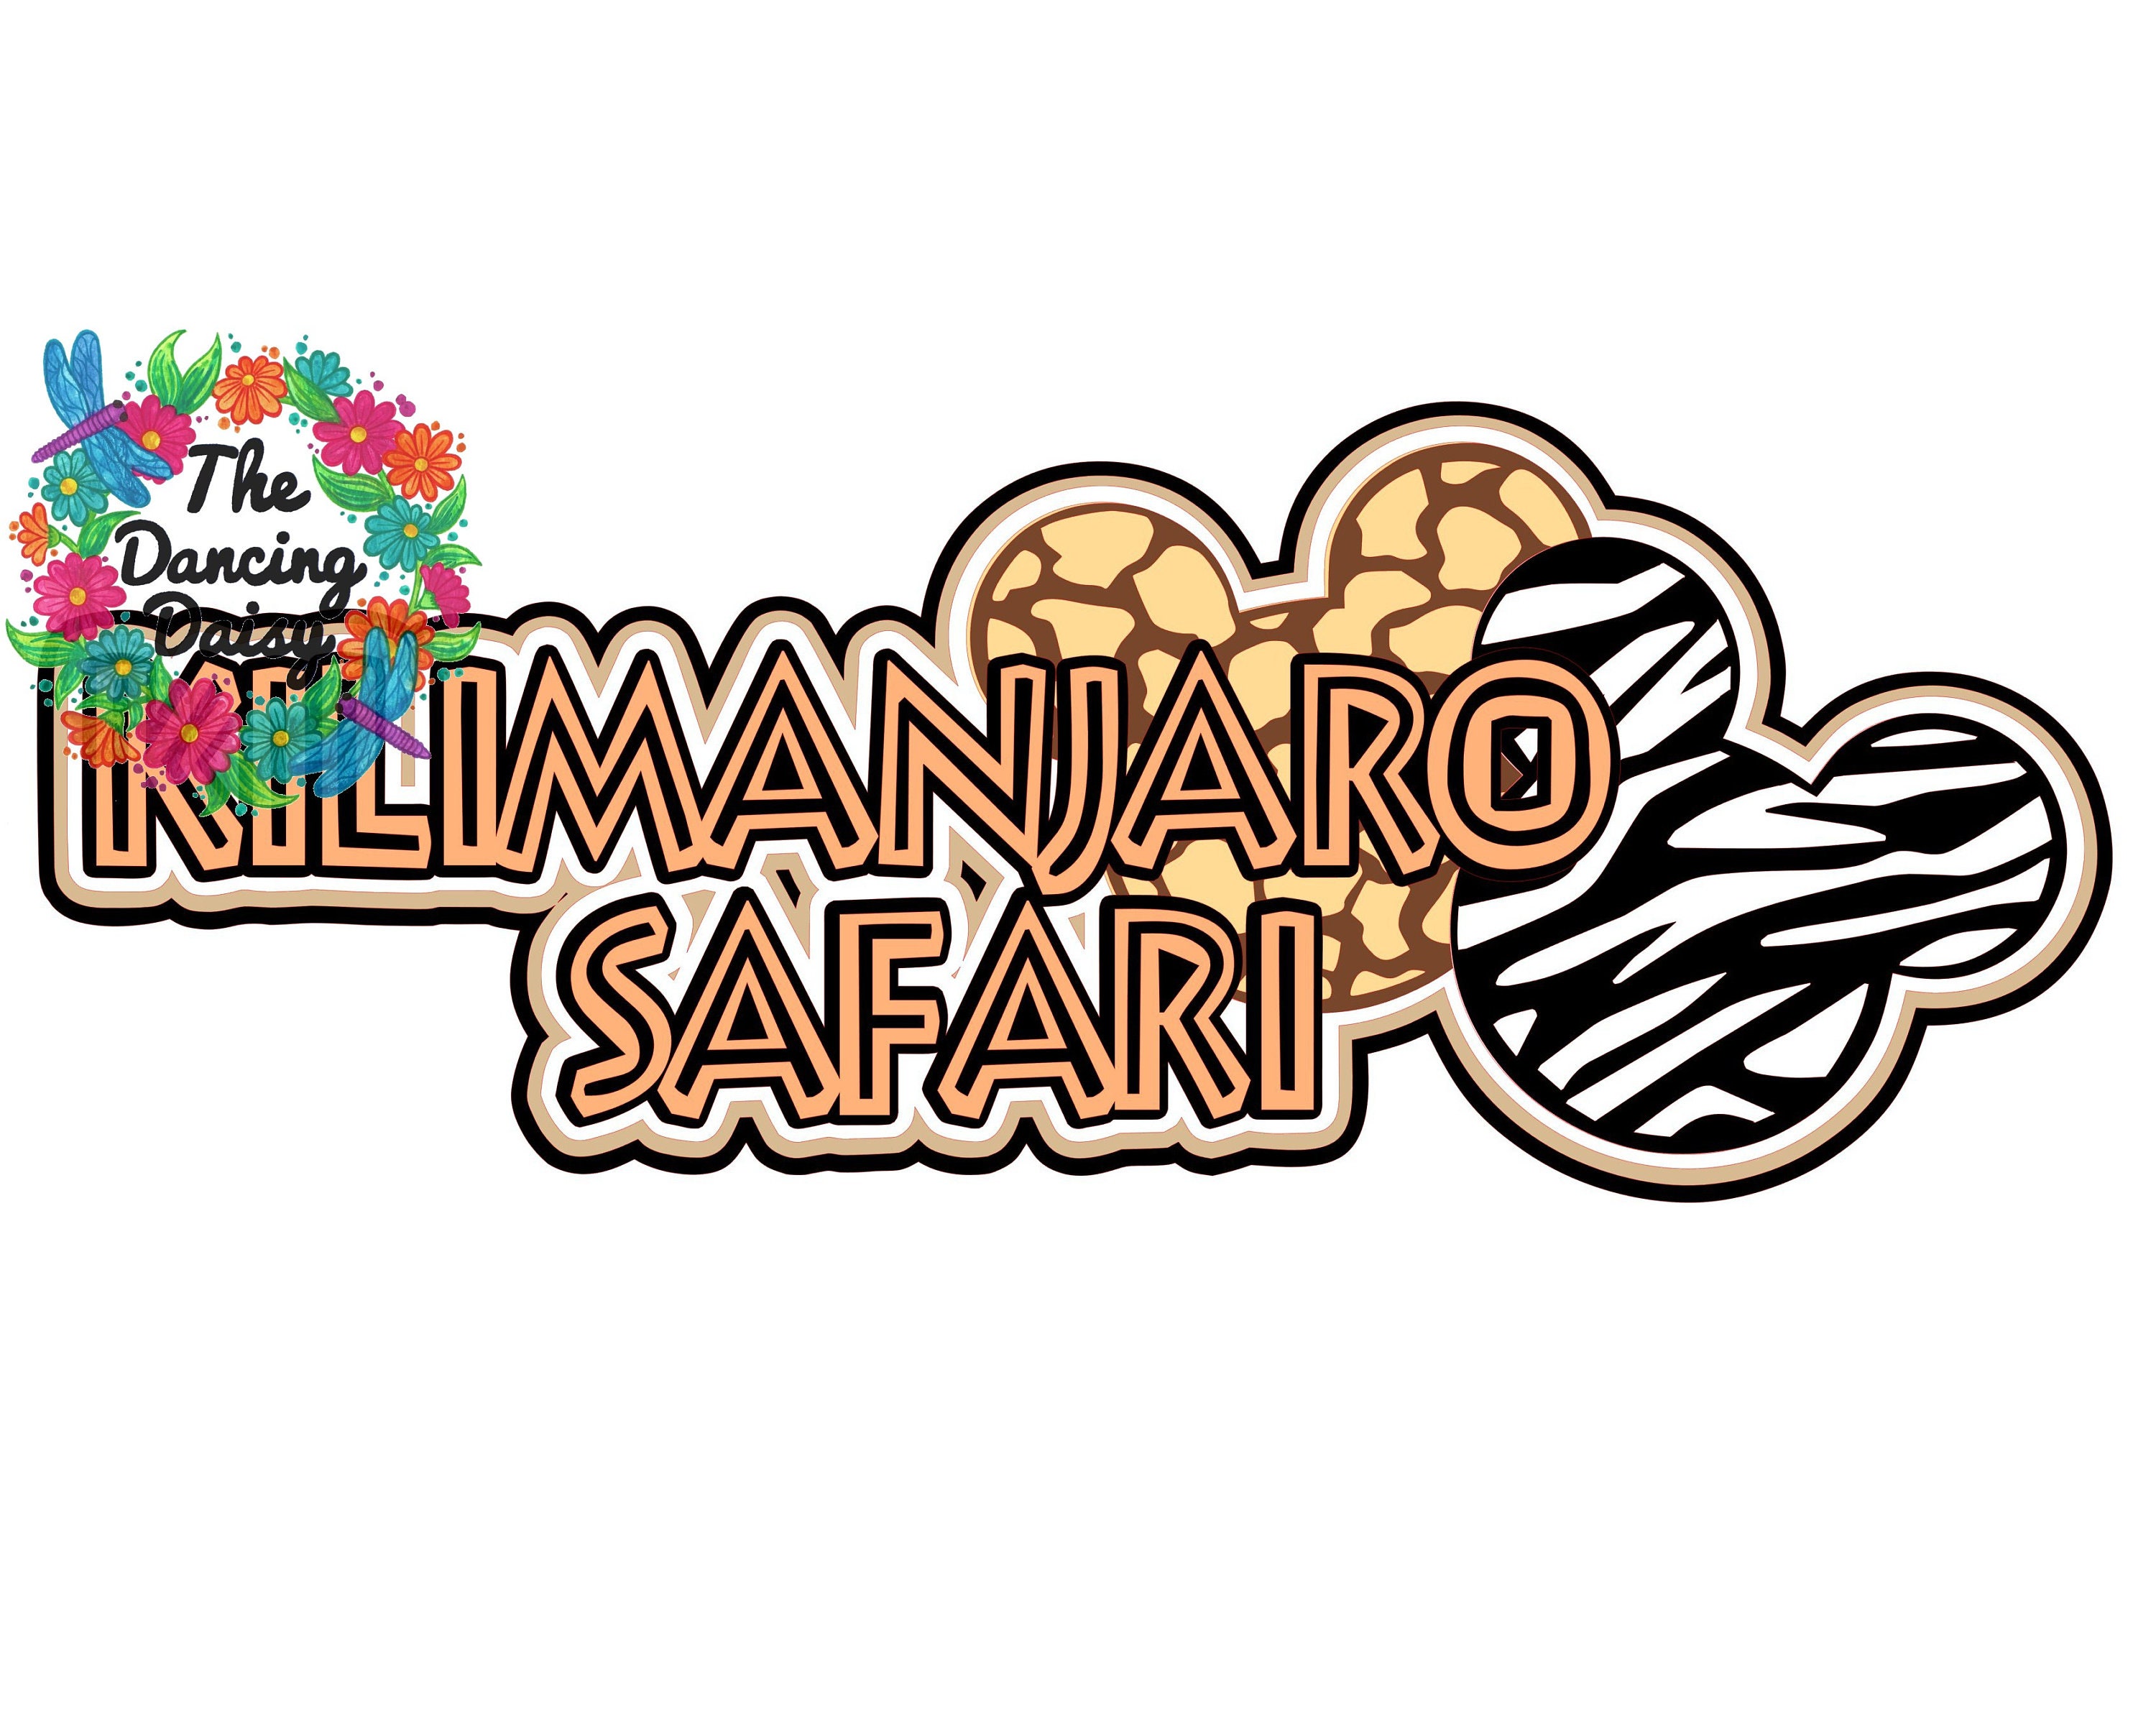 kilimanjaro safari logo